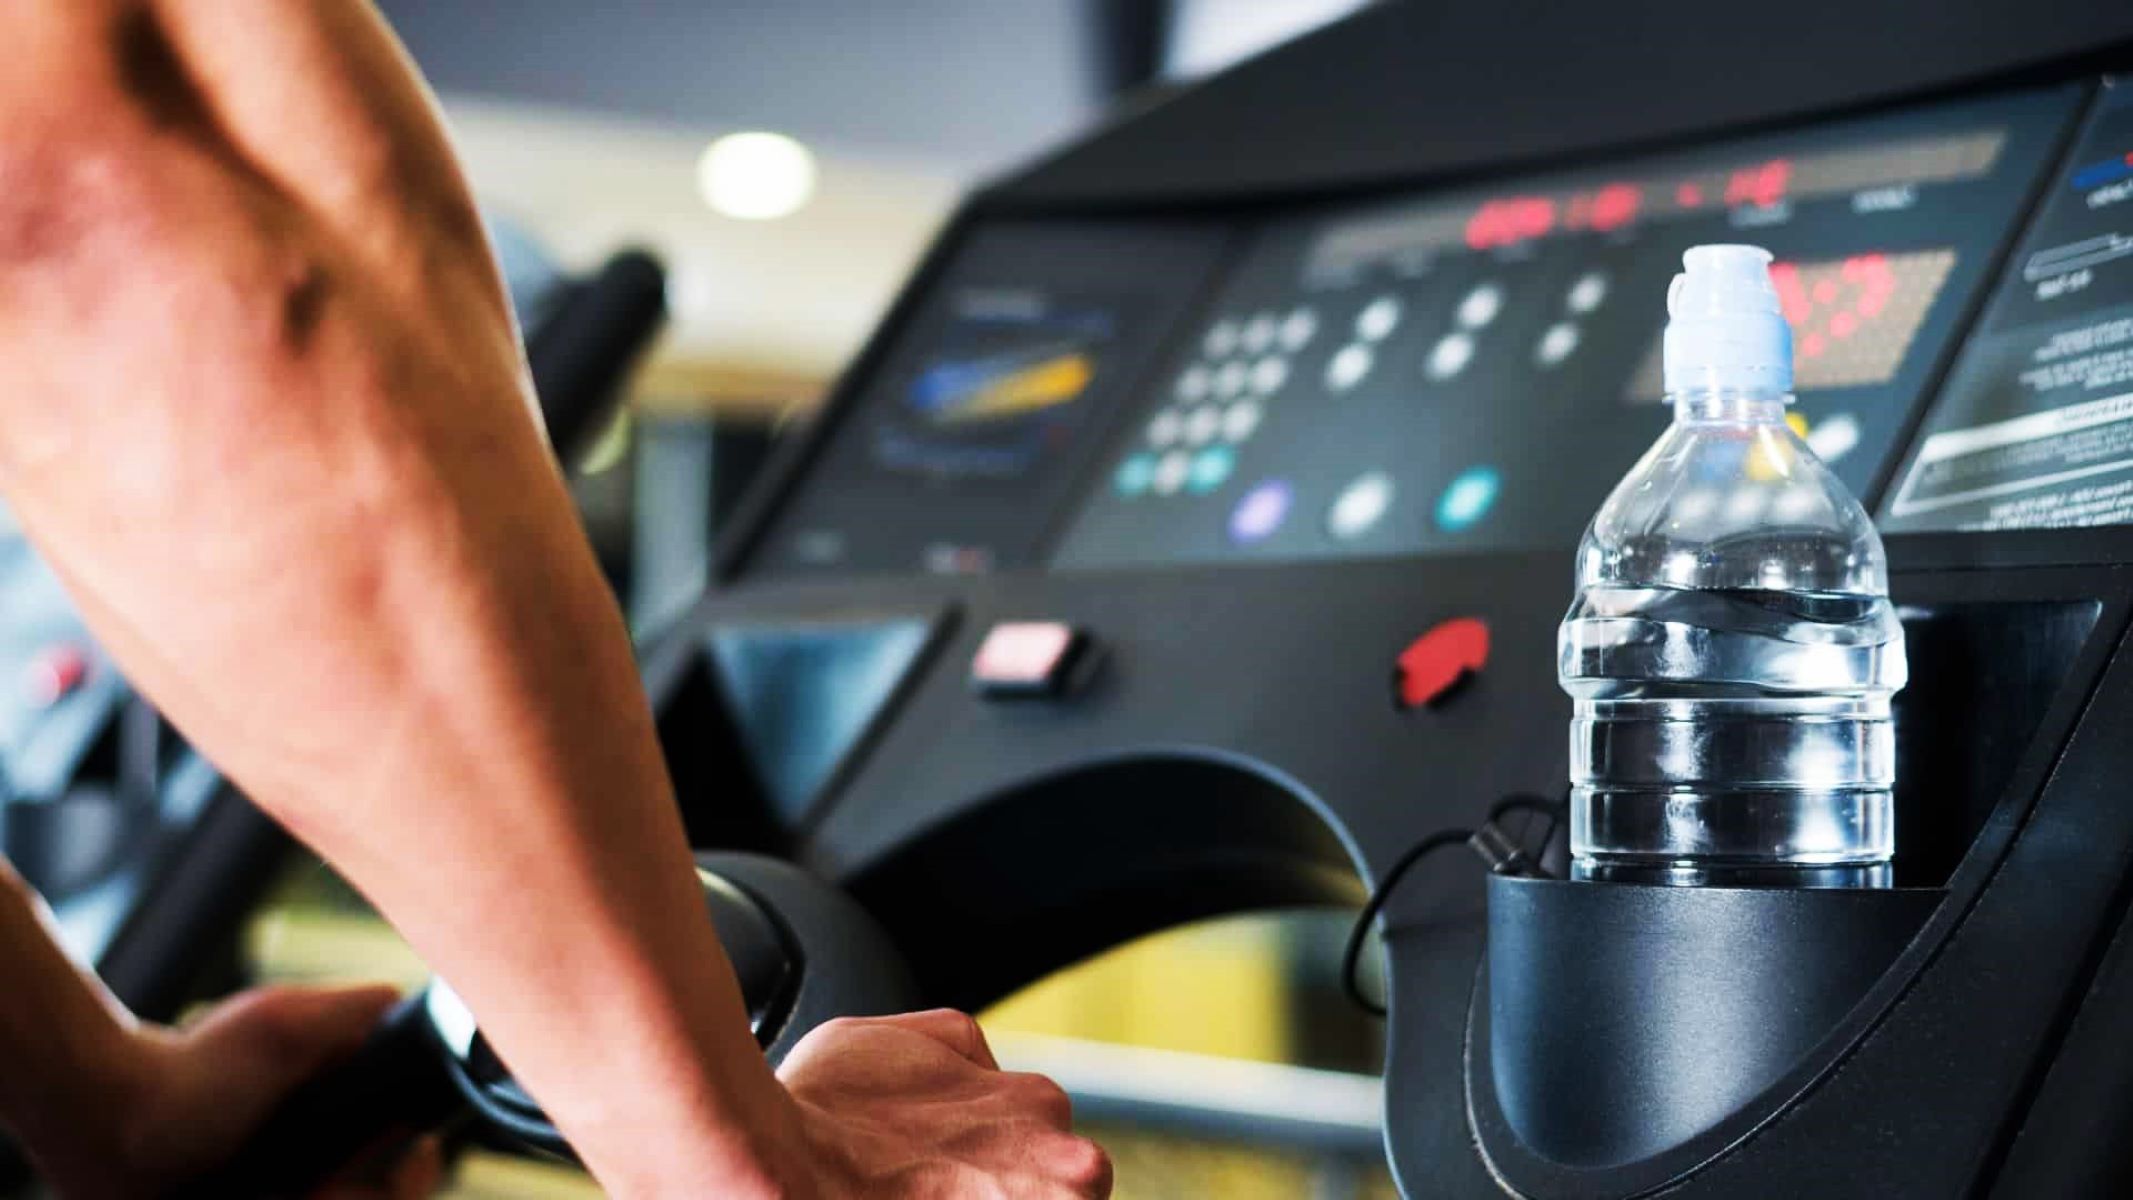 Expert Opinions On Marathon Training Using A Treadmill